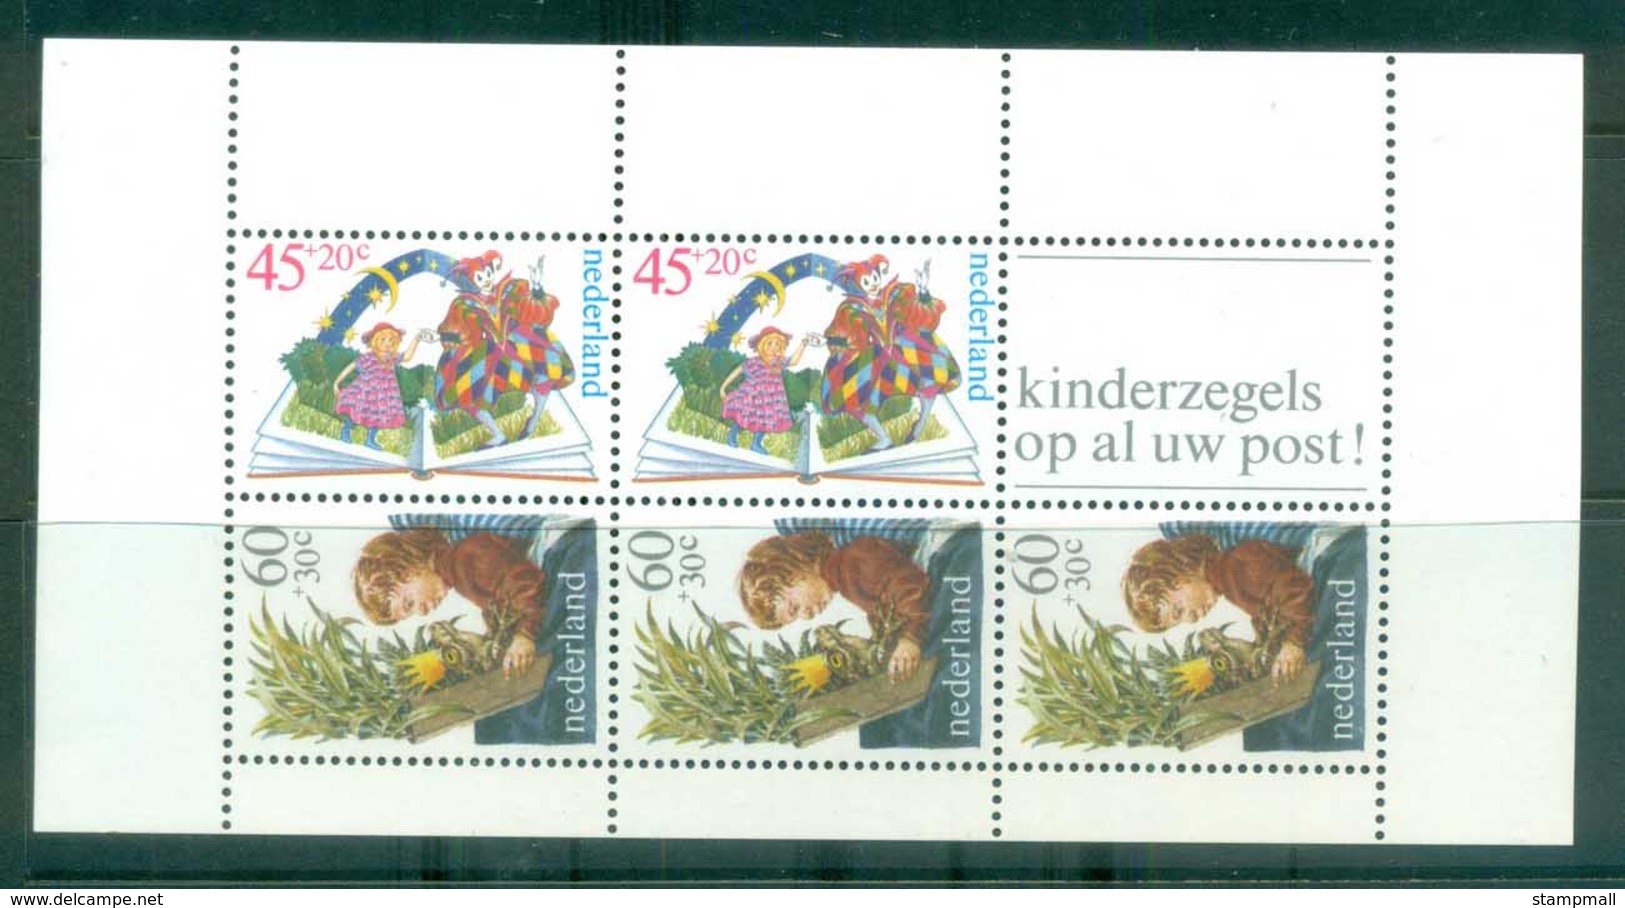 Netherlands 1980 Charity, Child Welfare, Children's Activities MS MUH Lot76602 - Unclassified